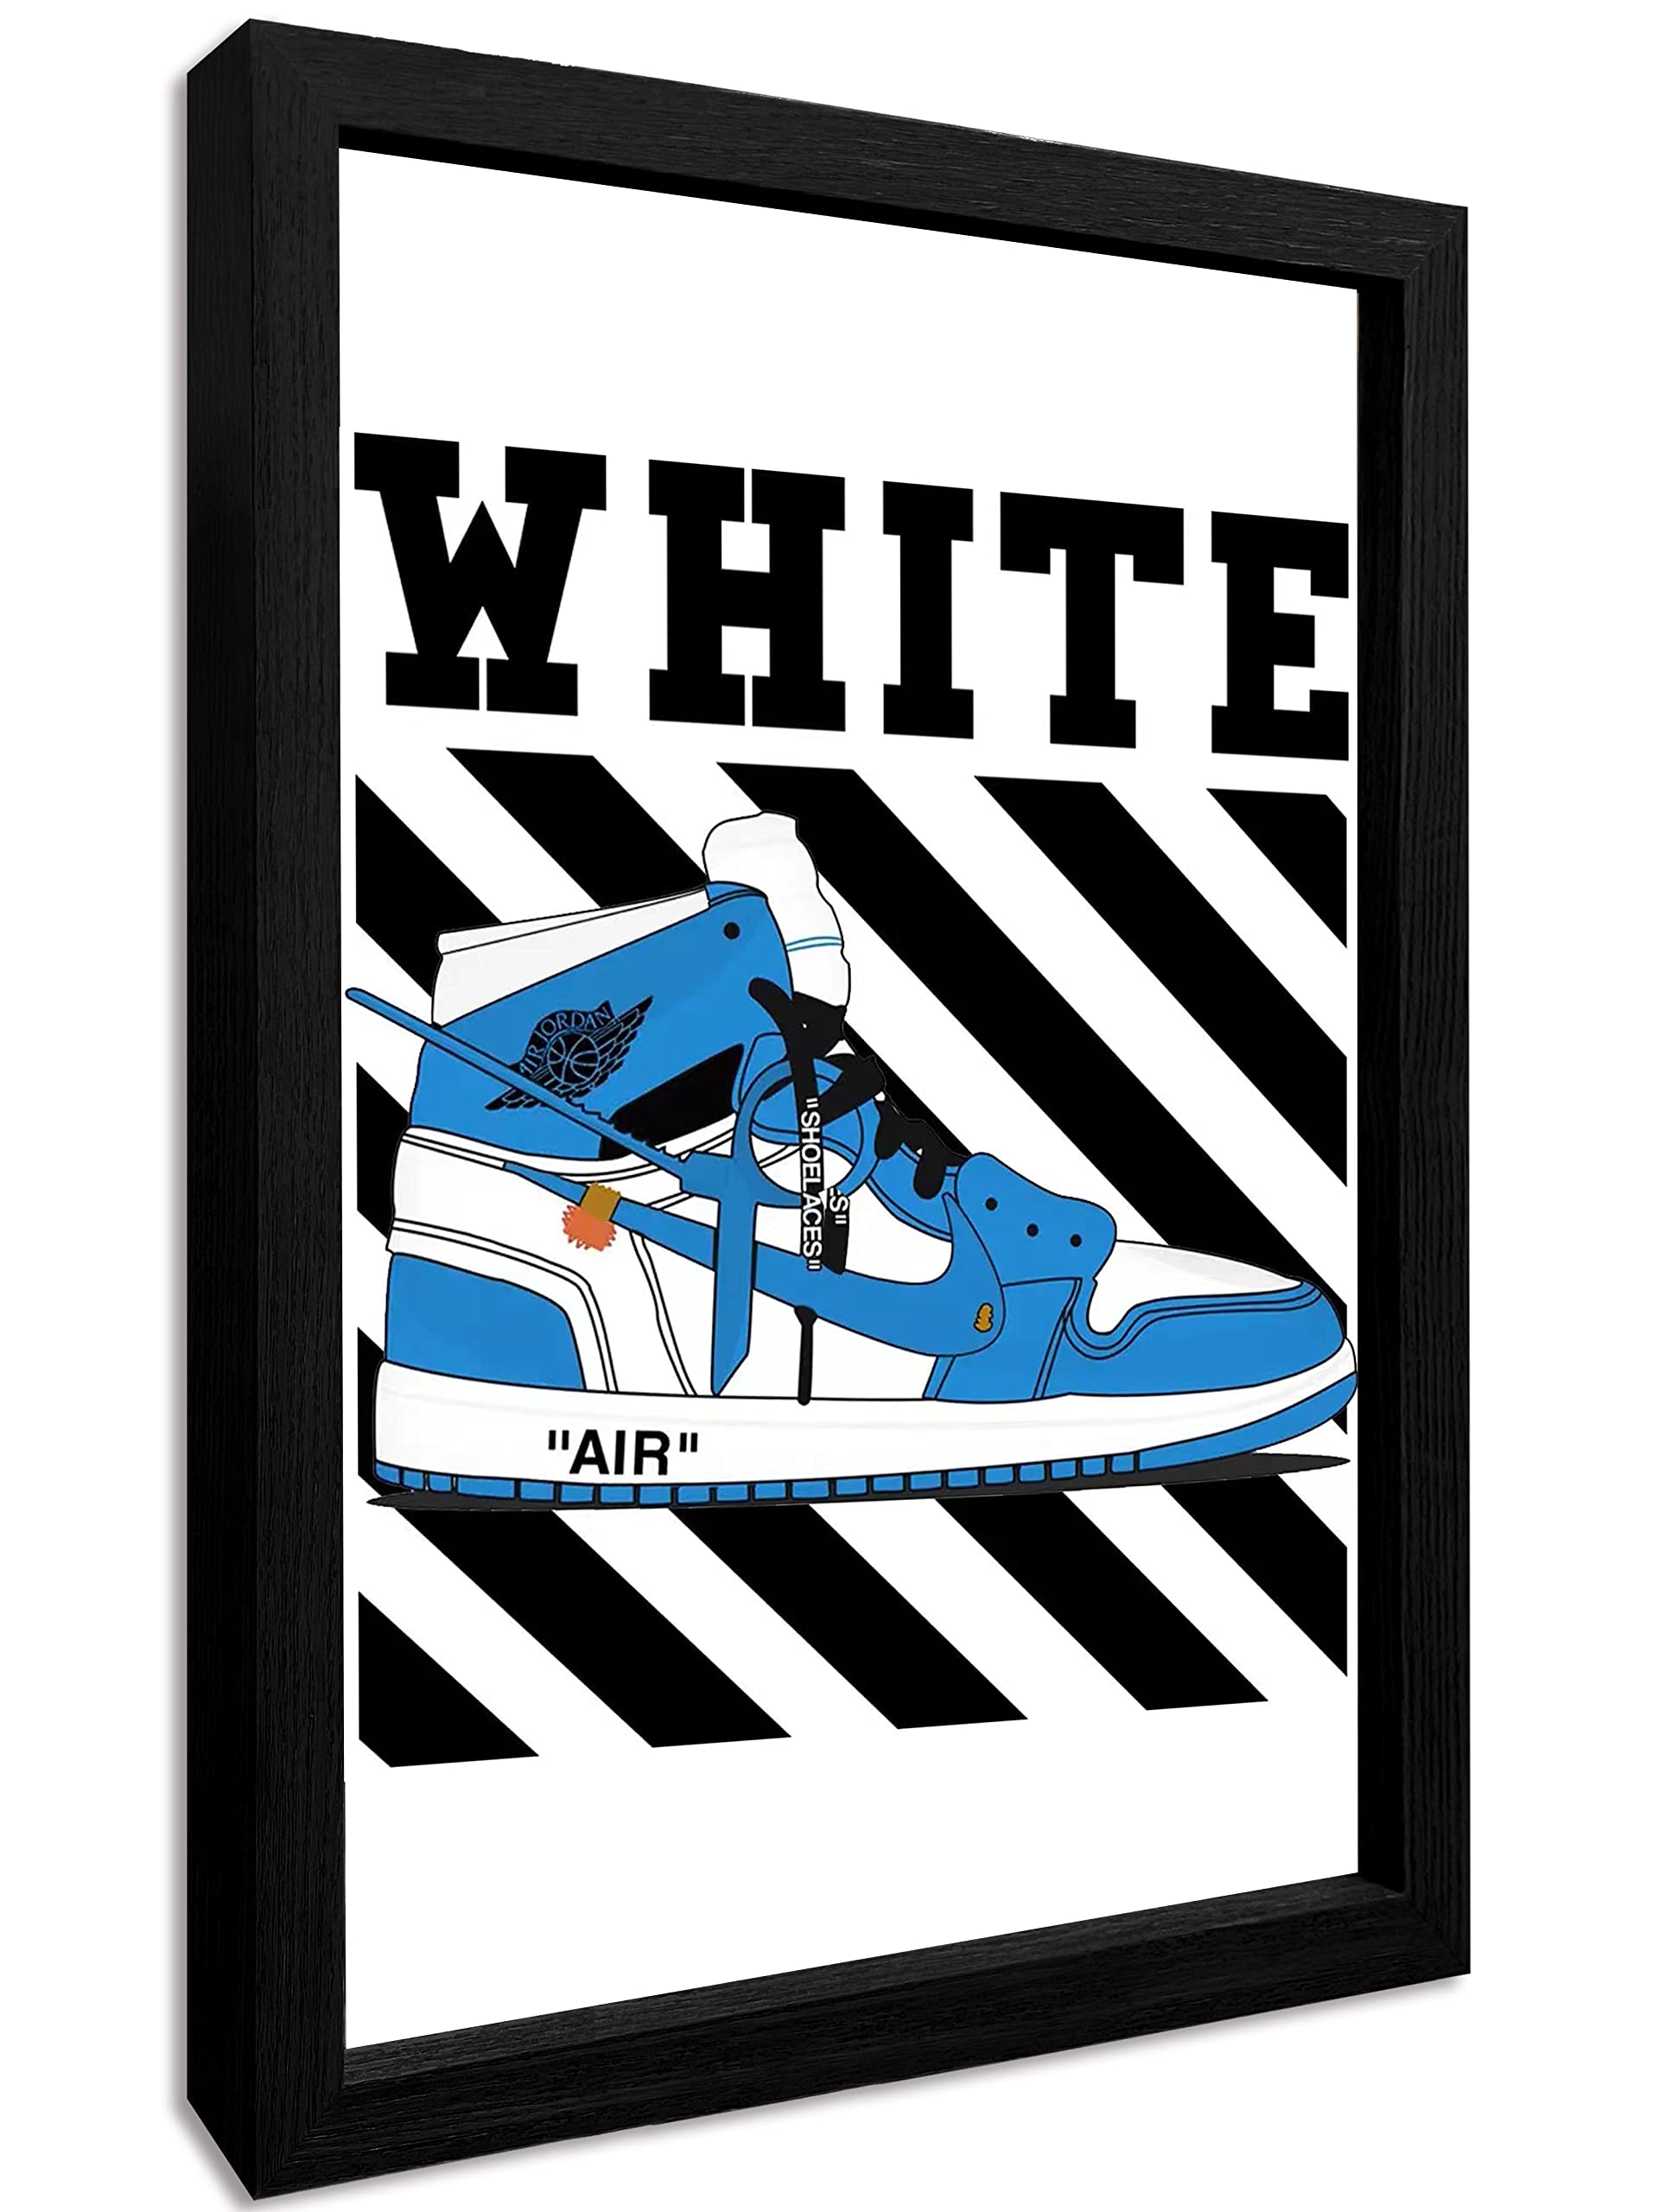 This is a sneakerhead poster of the Jordan 1 Off White. - Air Jordan 1